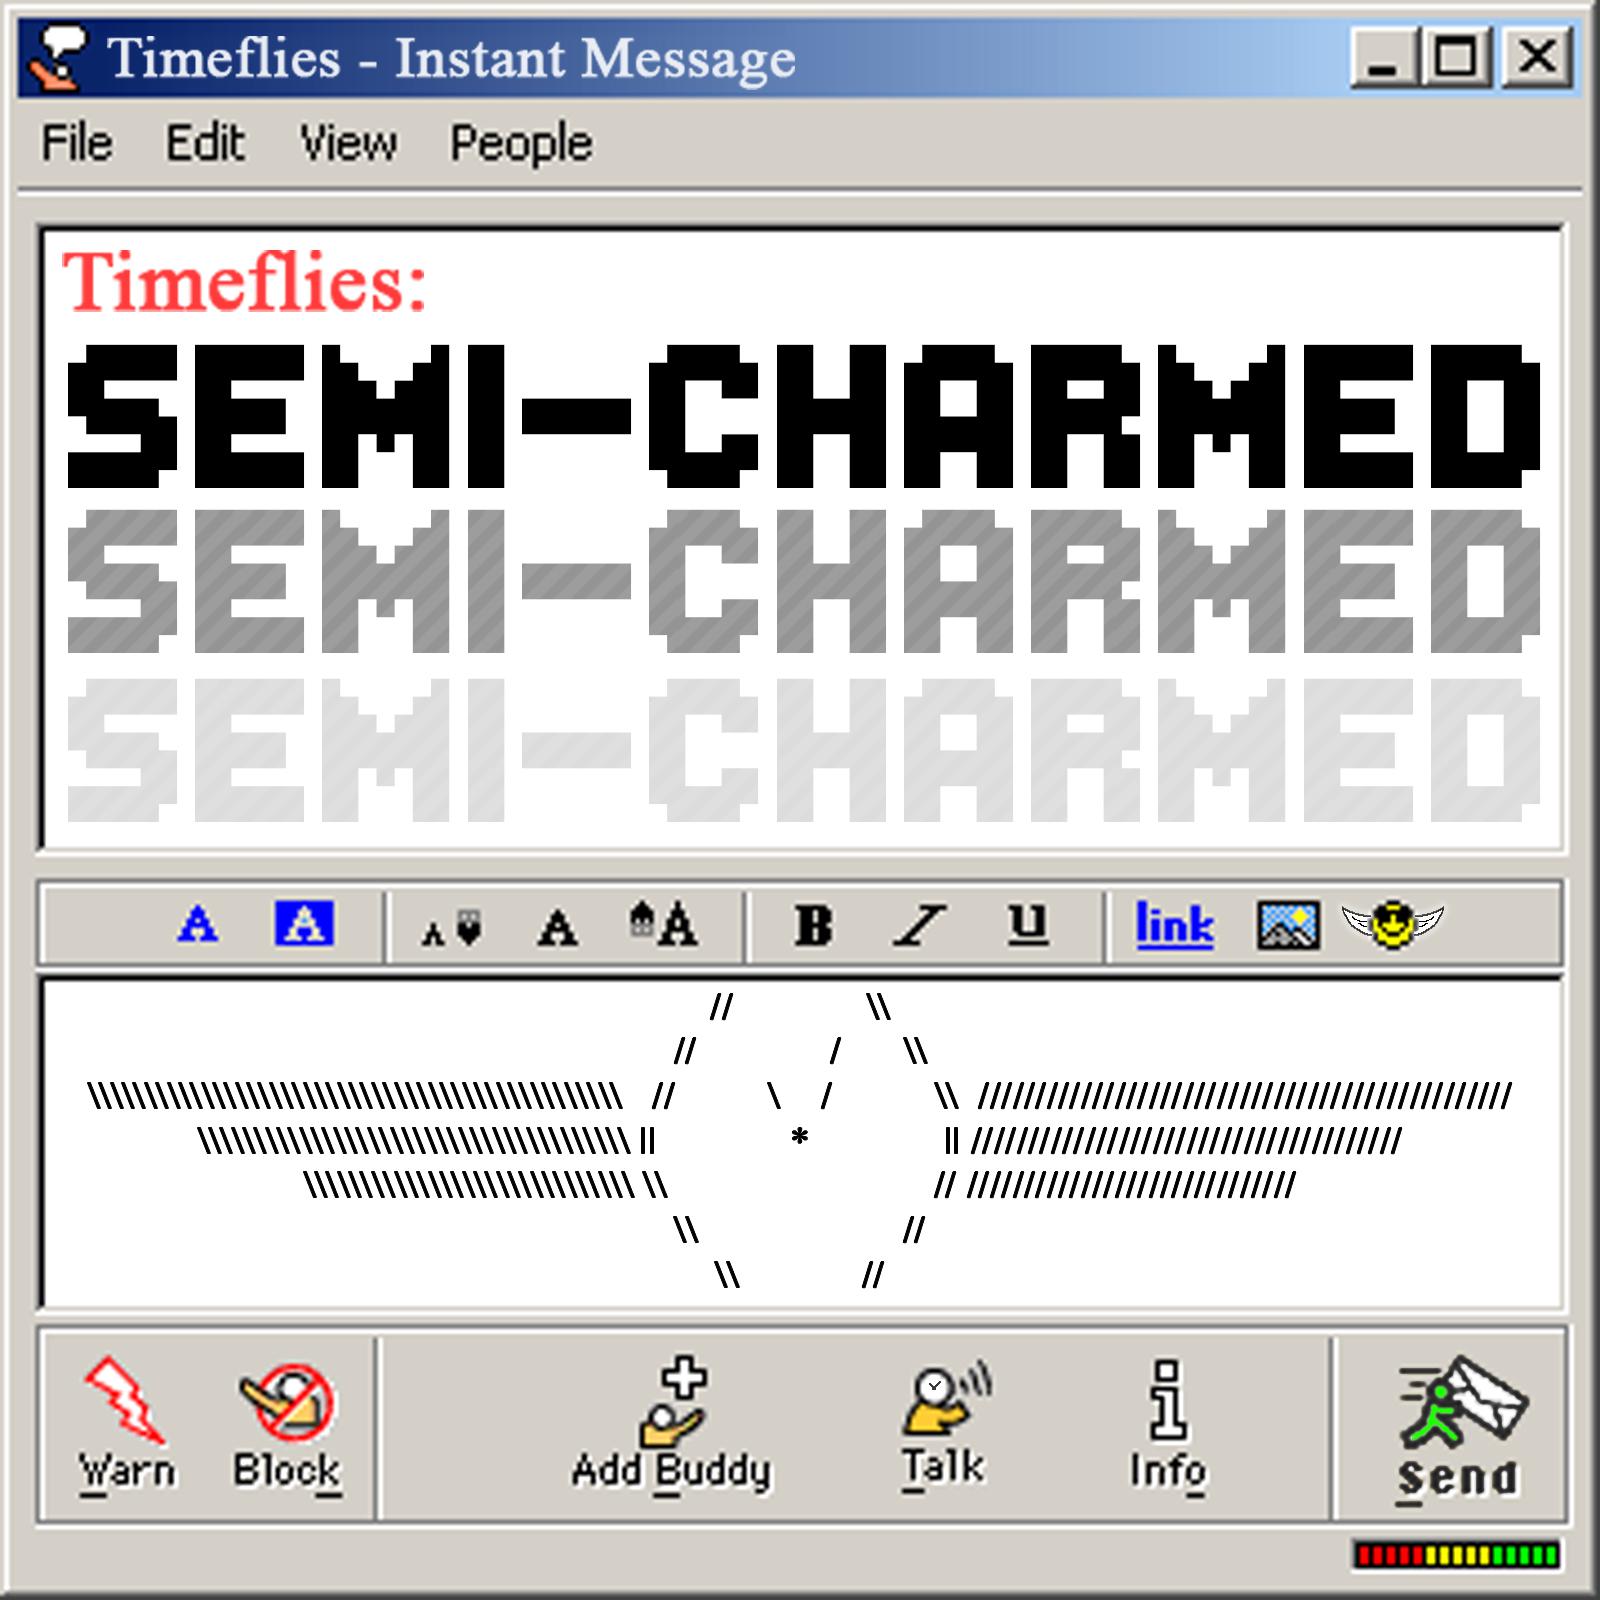 Semi-Charmed专辑